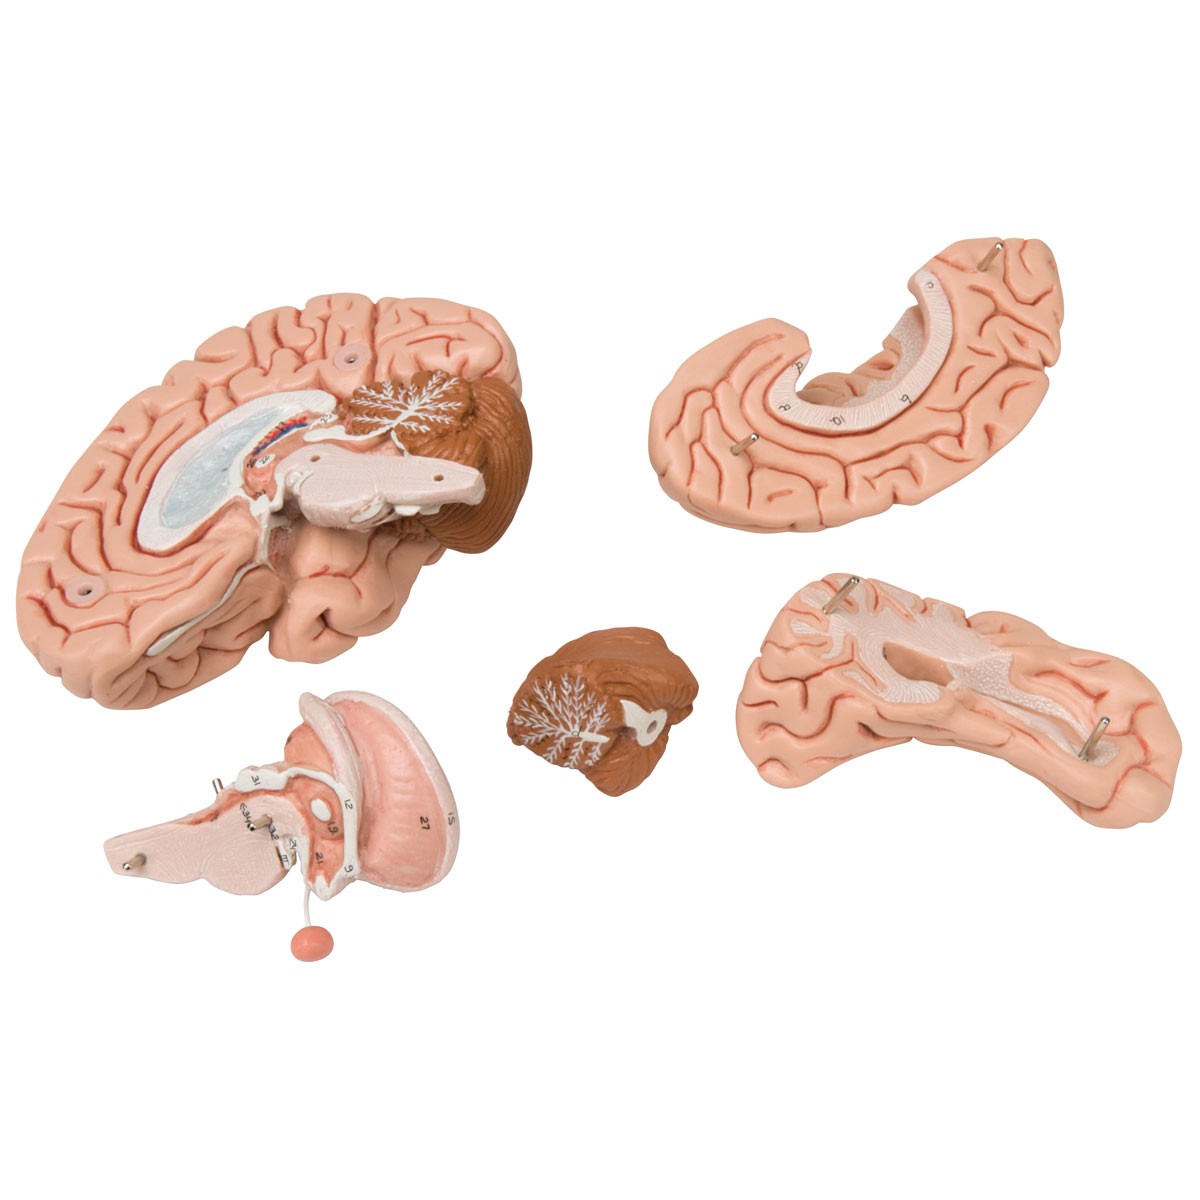 Klassik-Schädel mit Gehirn, 8-teilig